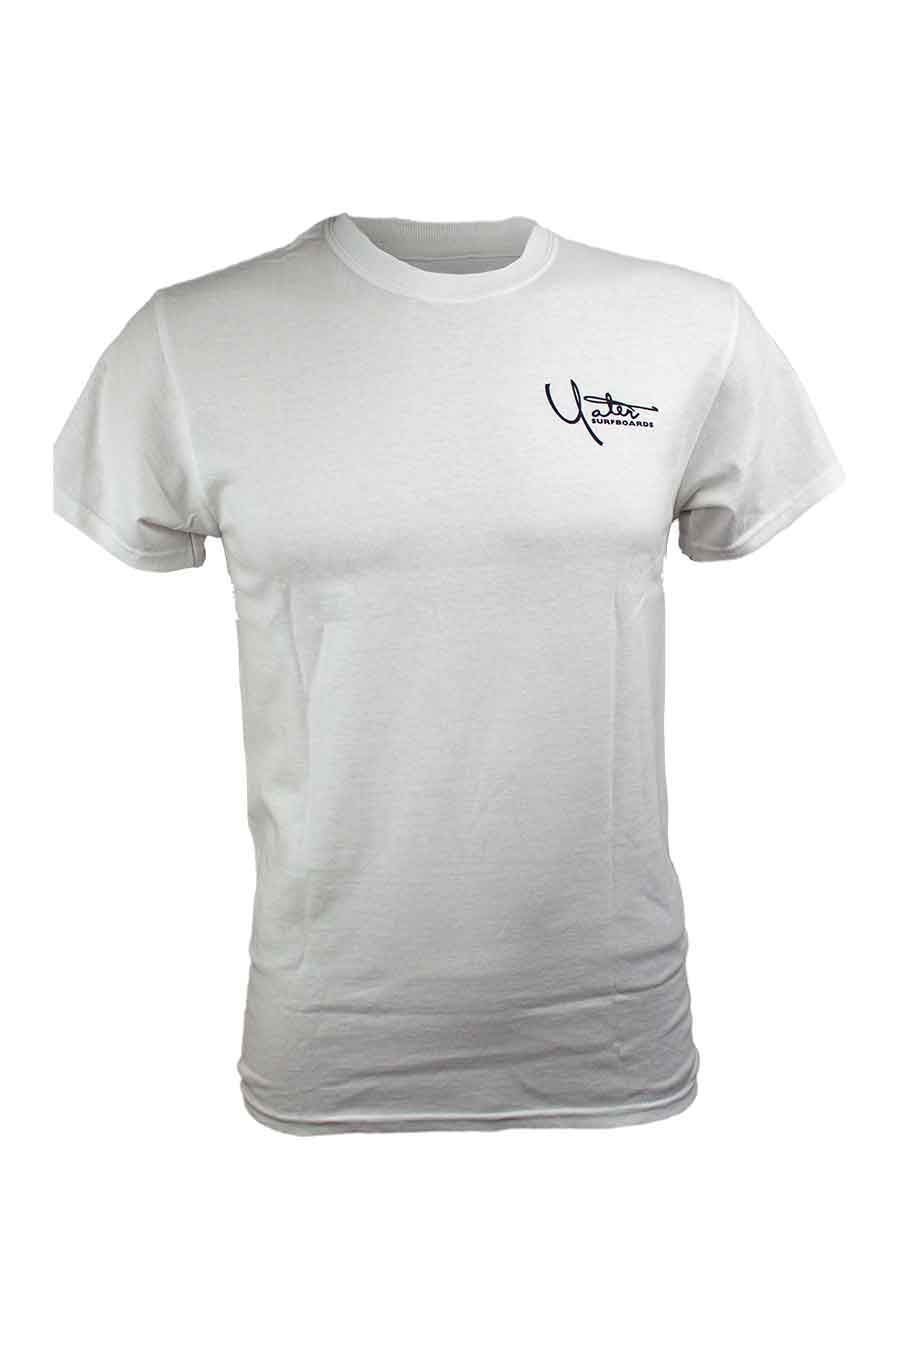 Short Sleeve T-Shirt with Santa Barbara Surf Shop Logo - Surf N' Wear Beach House Online